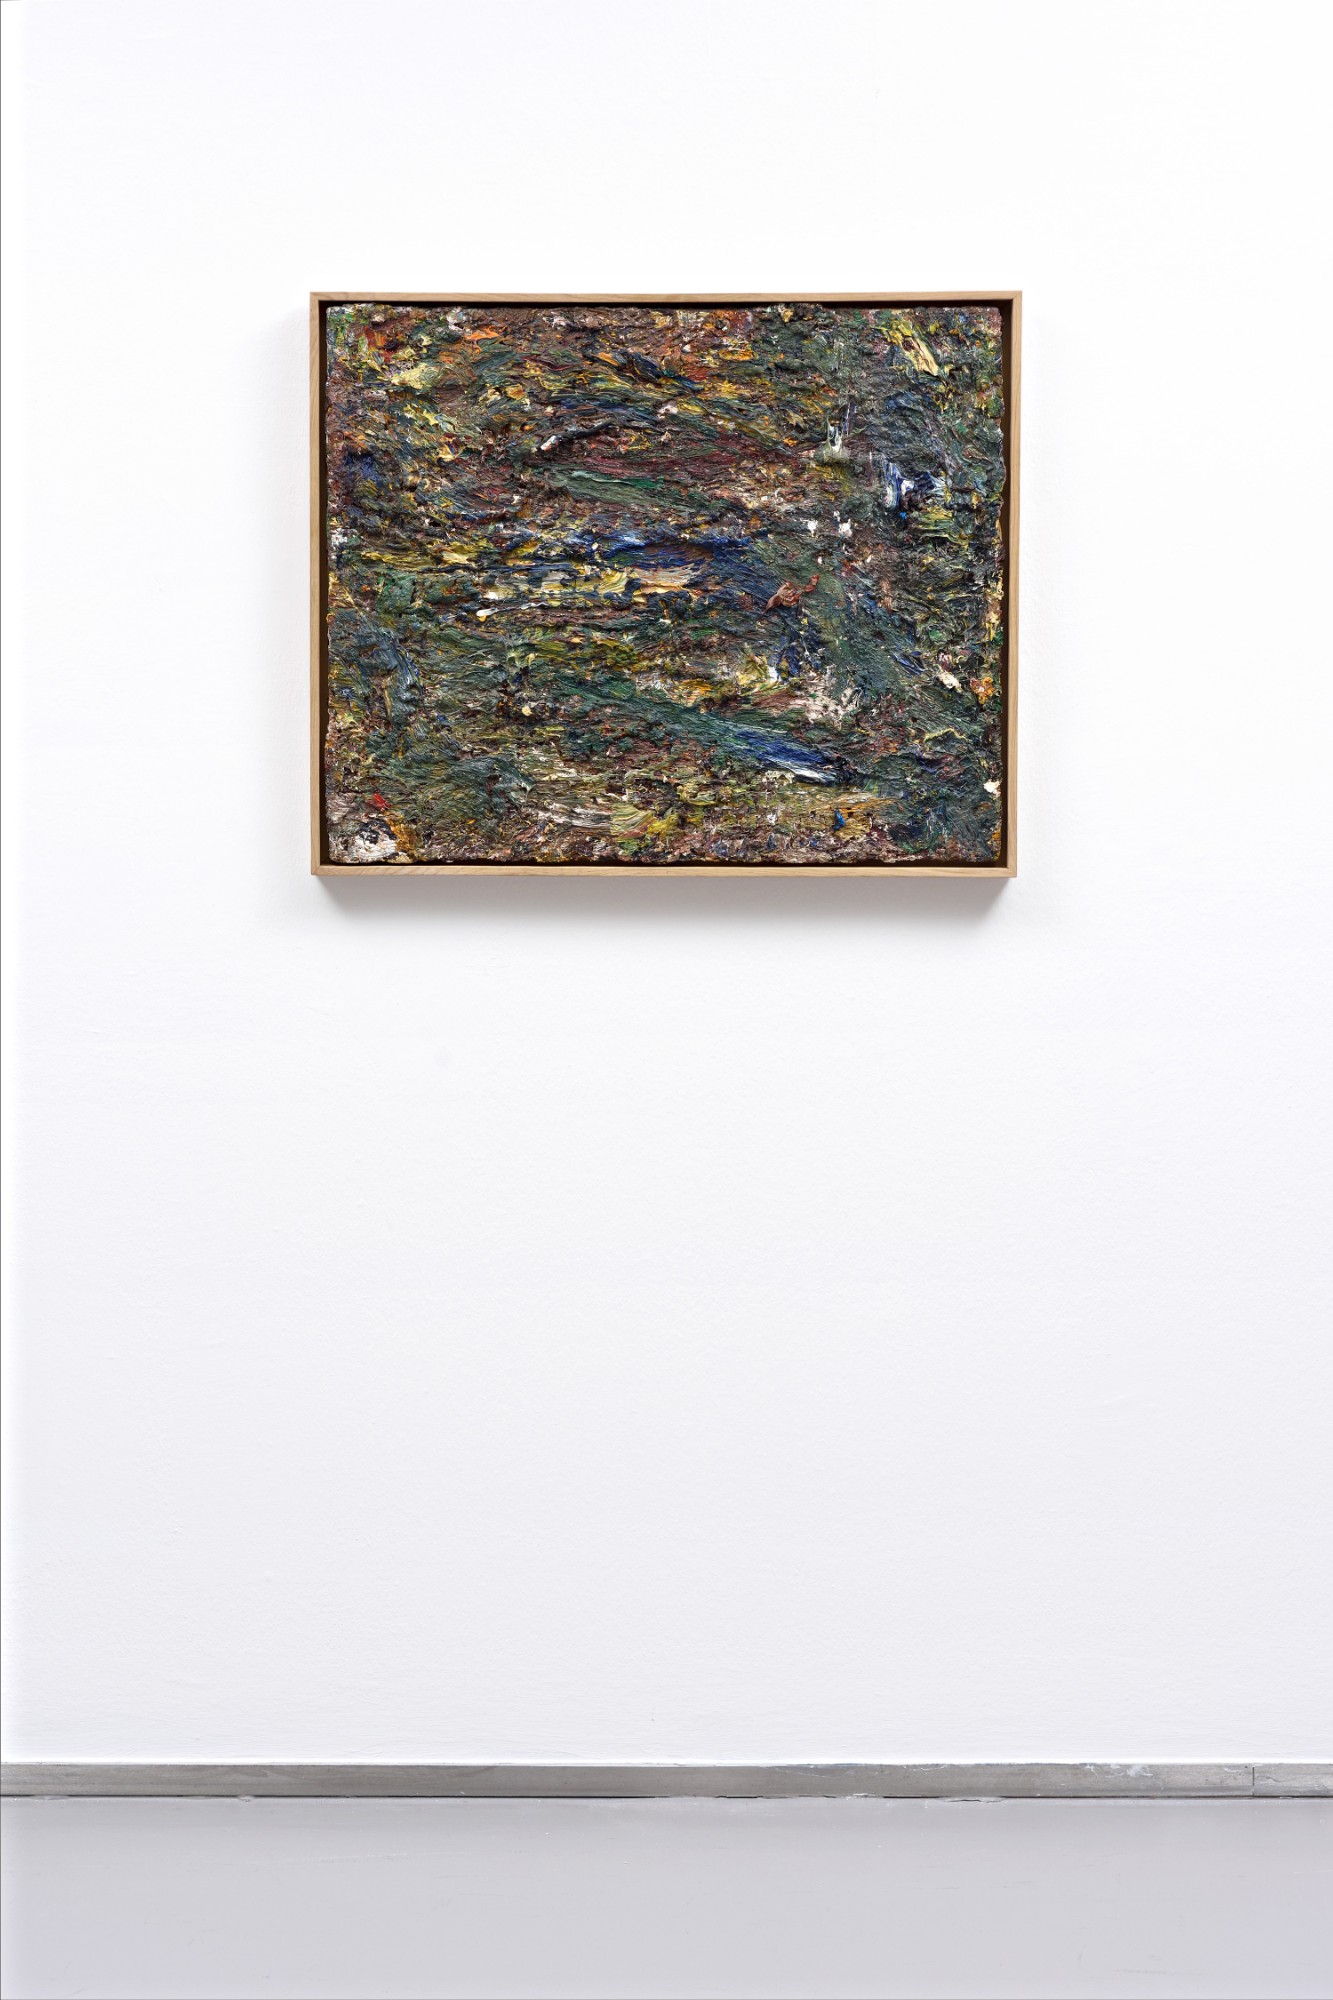 Eugène Leroy, Mer verte, 1993, oil on canvas, 60 x 72 cm